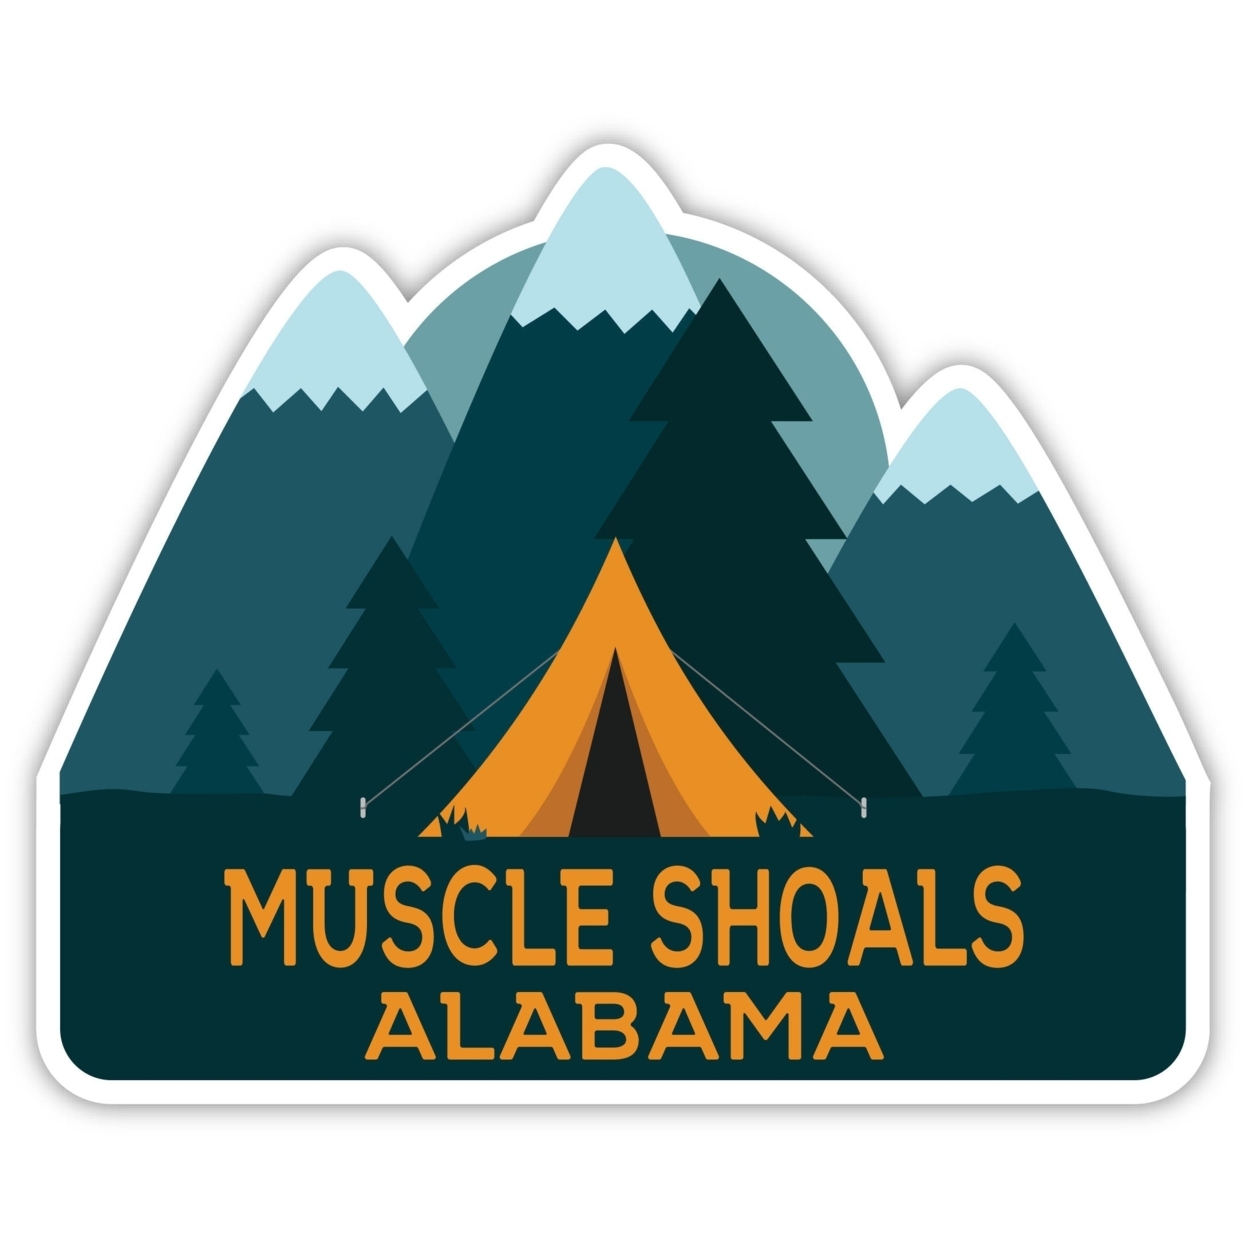 Muscle Shoals Alabama Souvenir Decorative Stickers (Choose Theme And Size) - Single Unit, 4-Inch, Tent